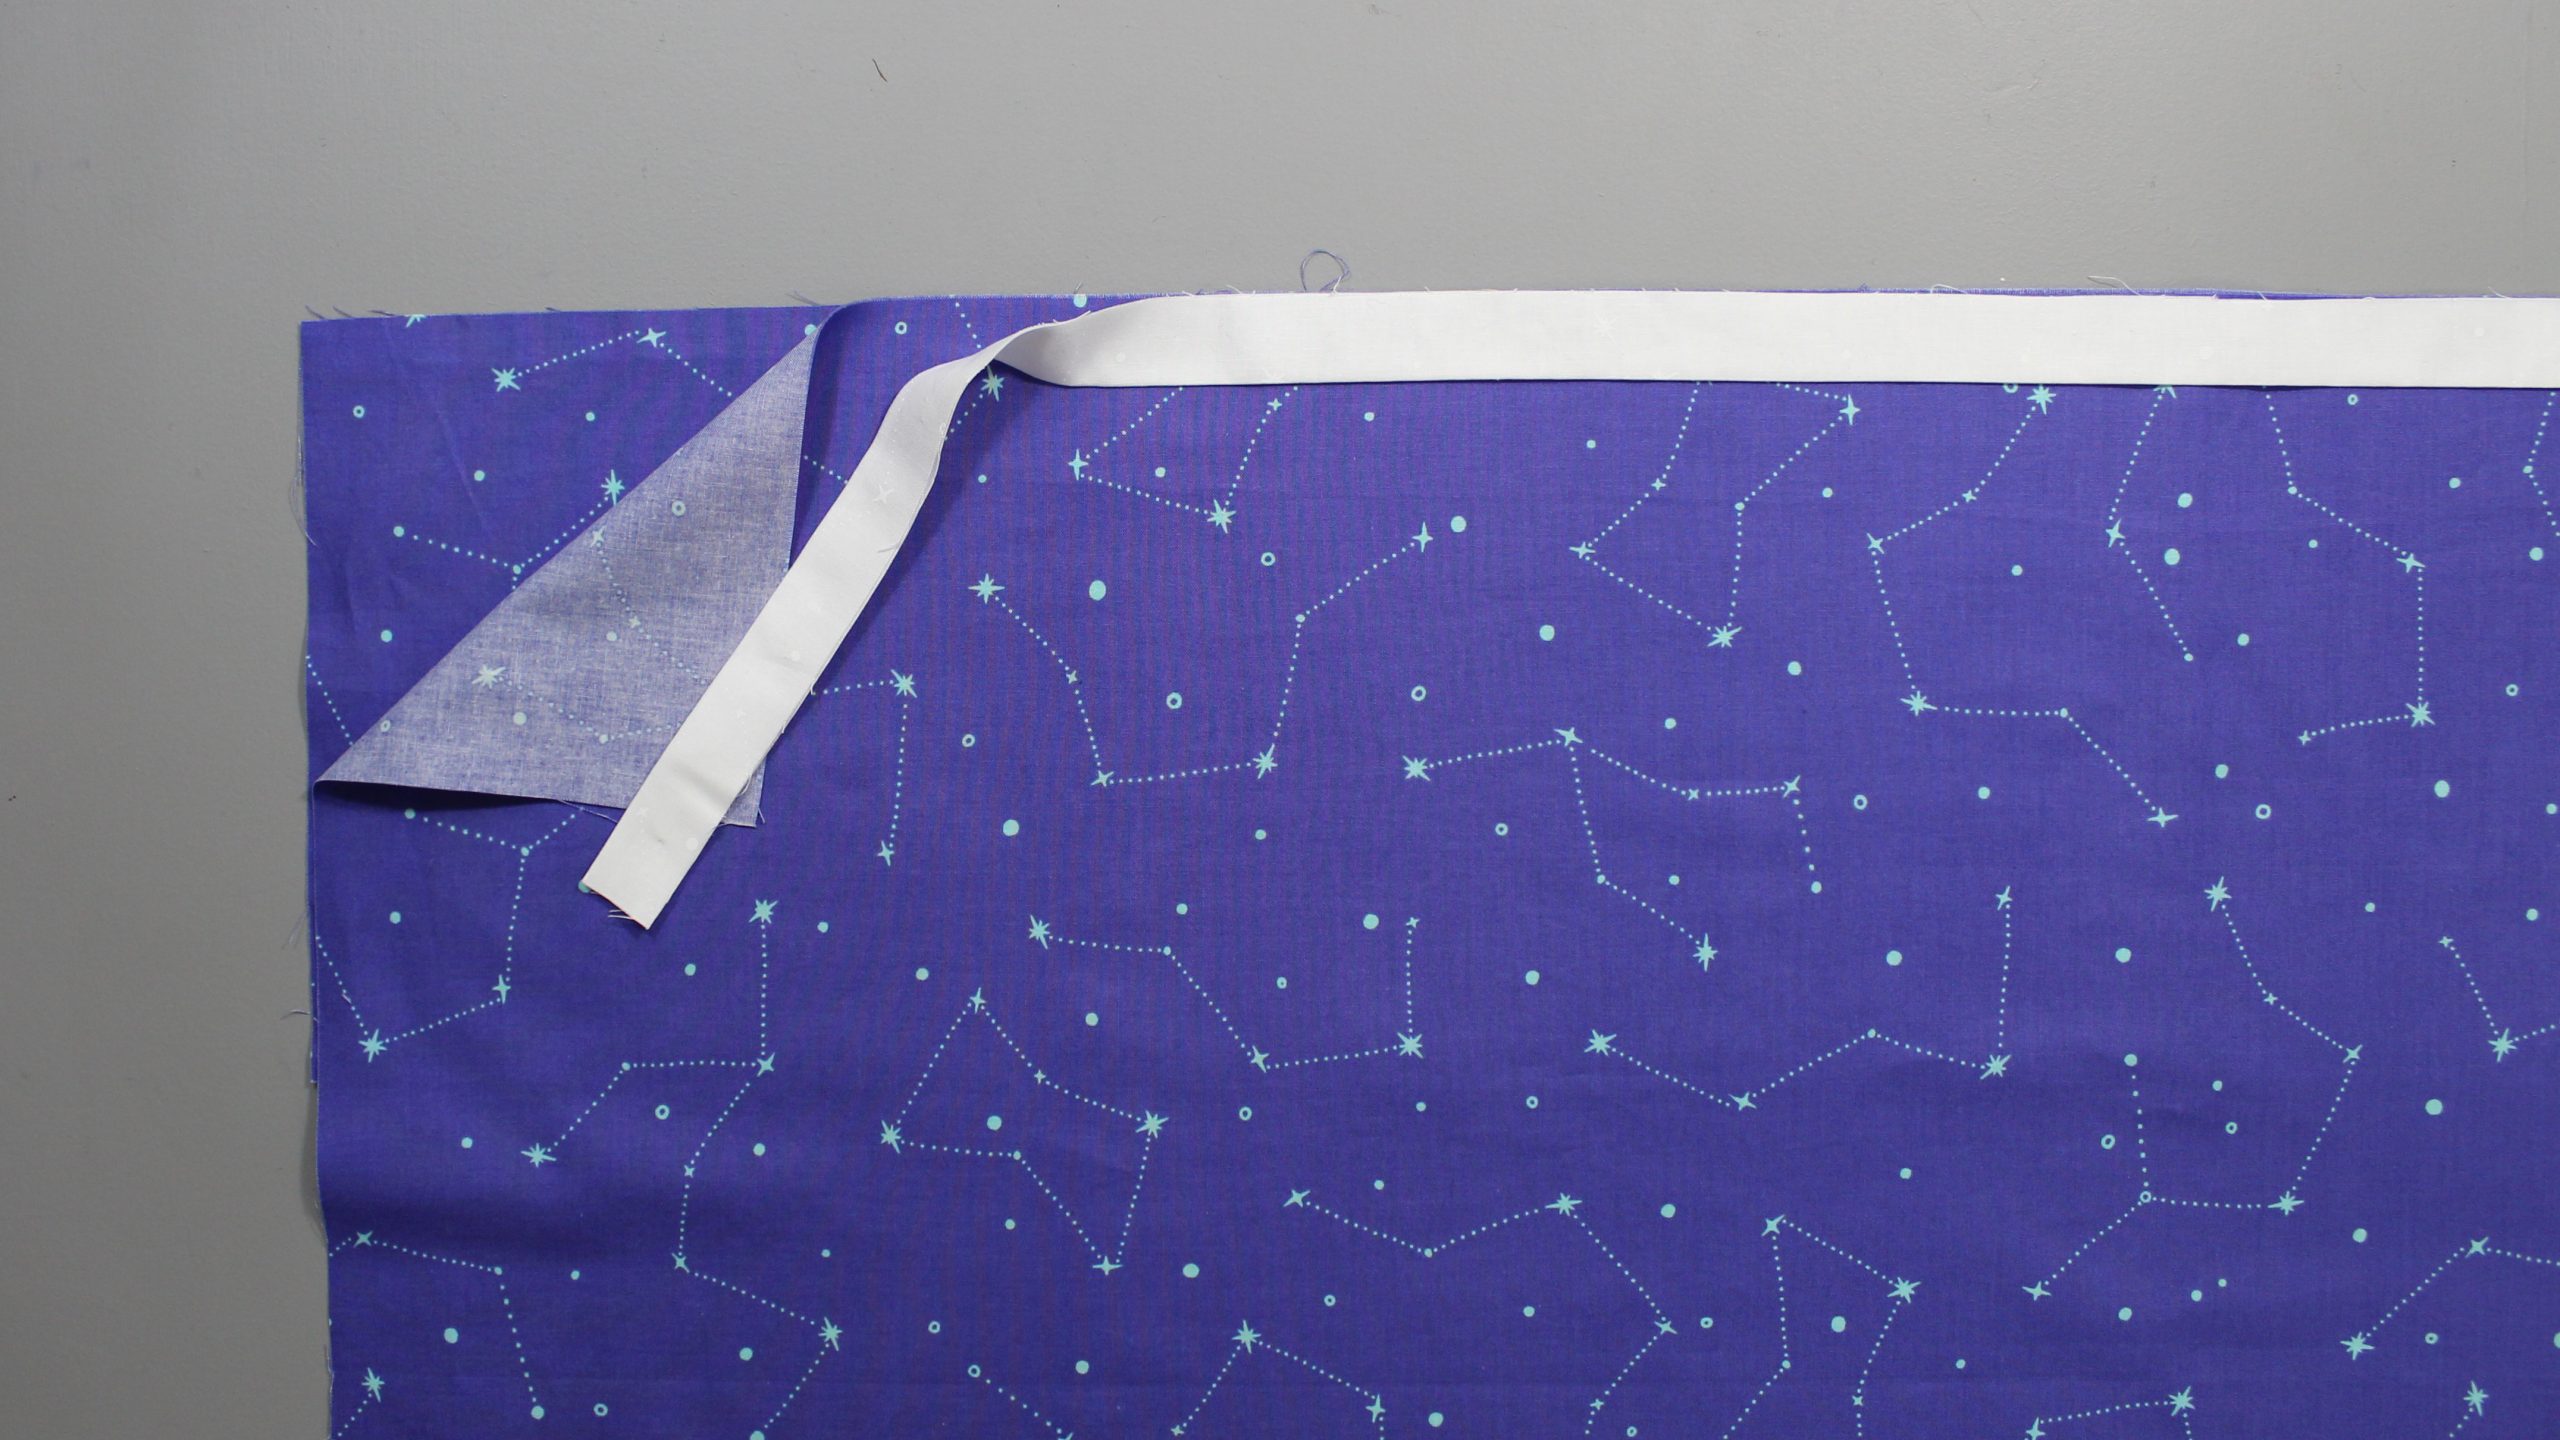 Layered constellation fabric